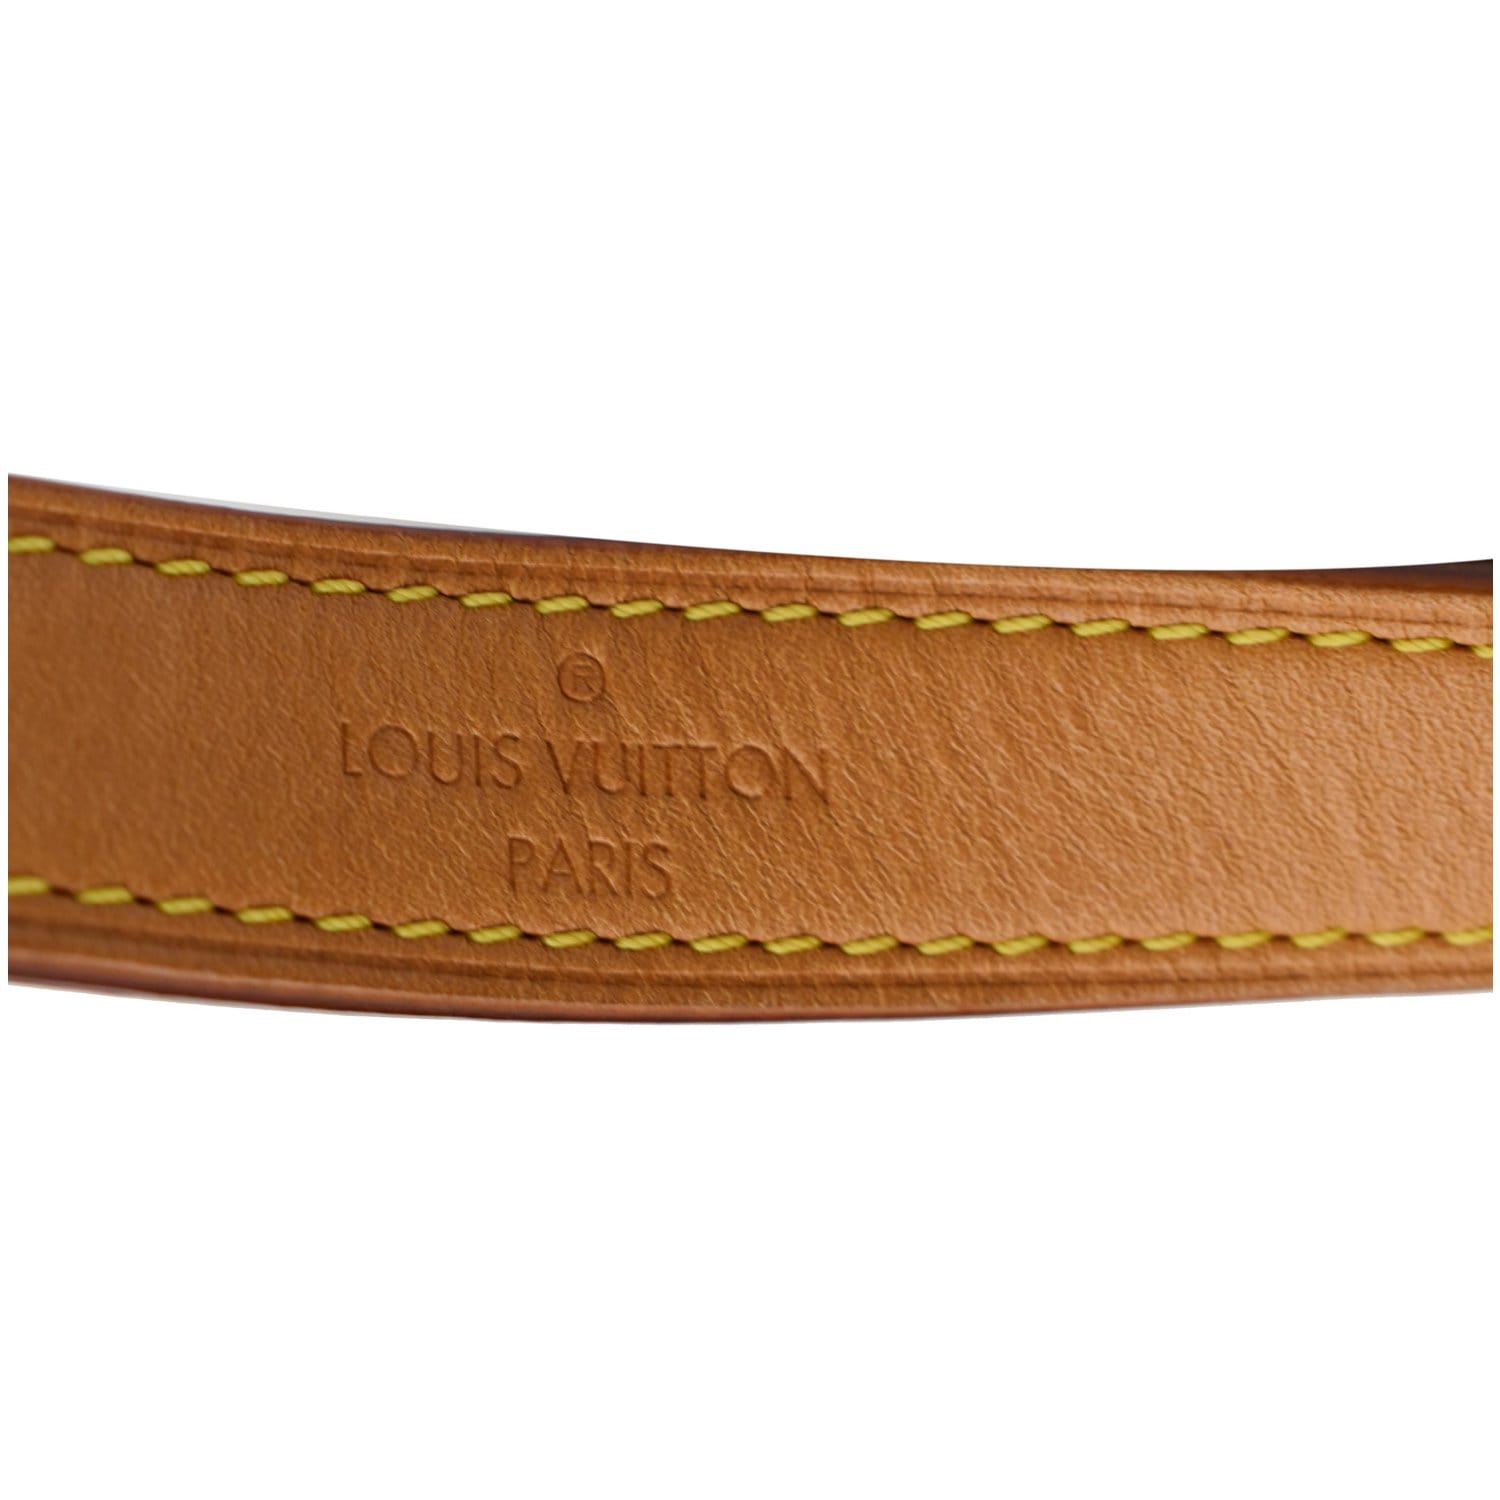 Louis Vuitton Flower Hobo Shoulder Bag Brown Monogram Date Stamp